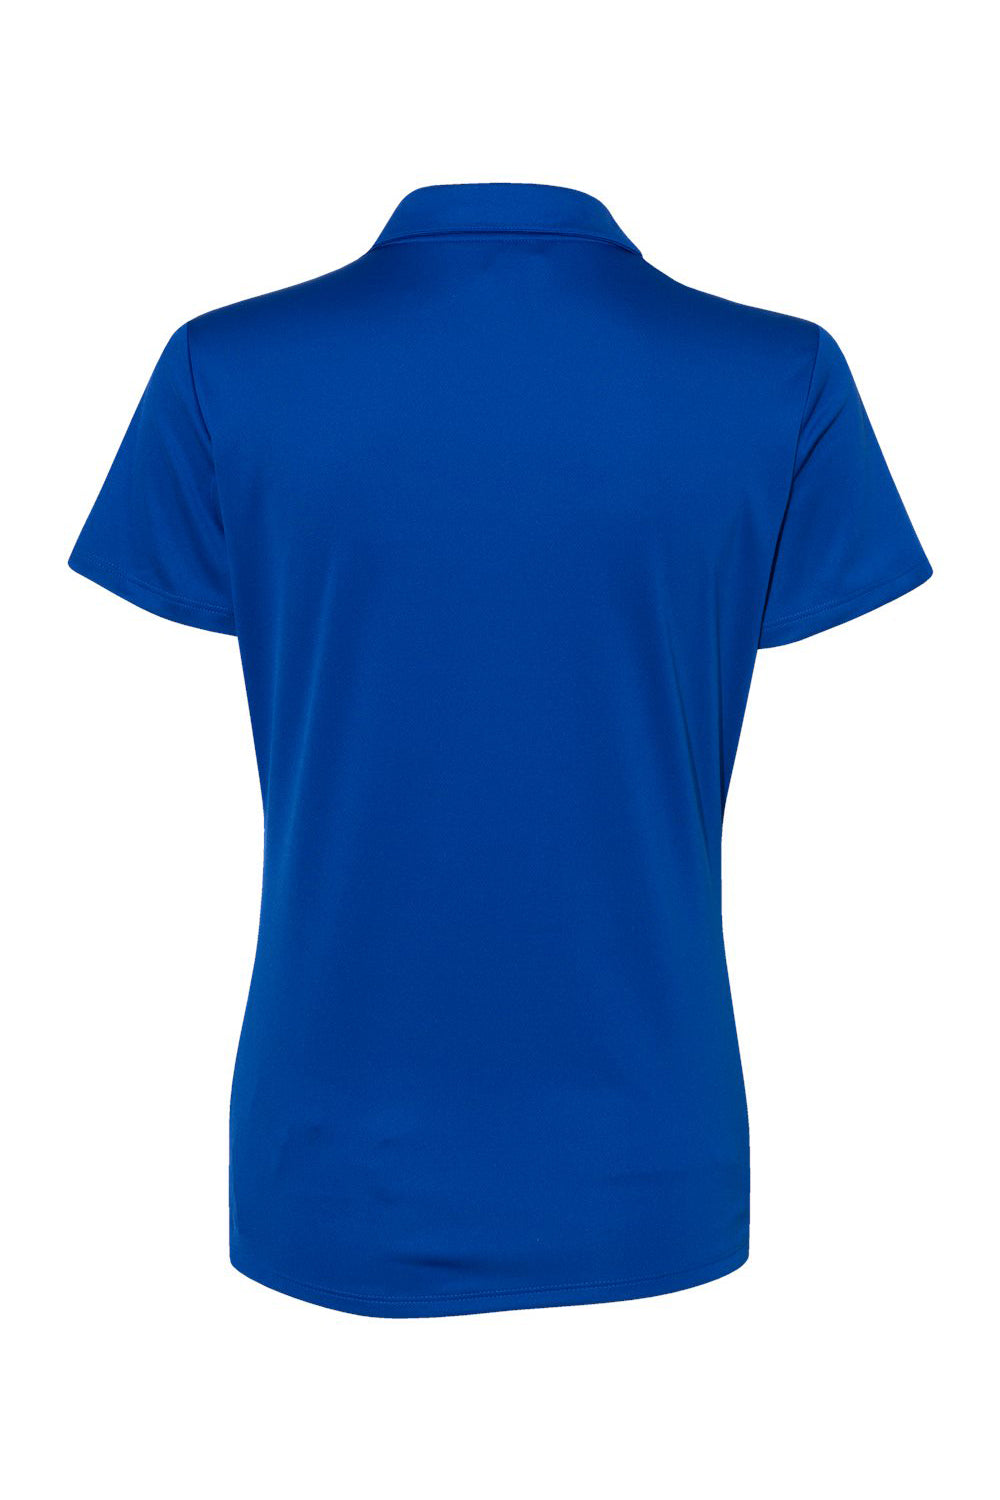 Adidas A231 Womens Performance UPF 50+ Short Sleeve Polo Shirt Collegiate Royal Blue Flat Back